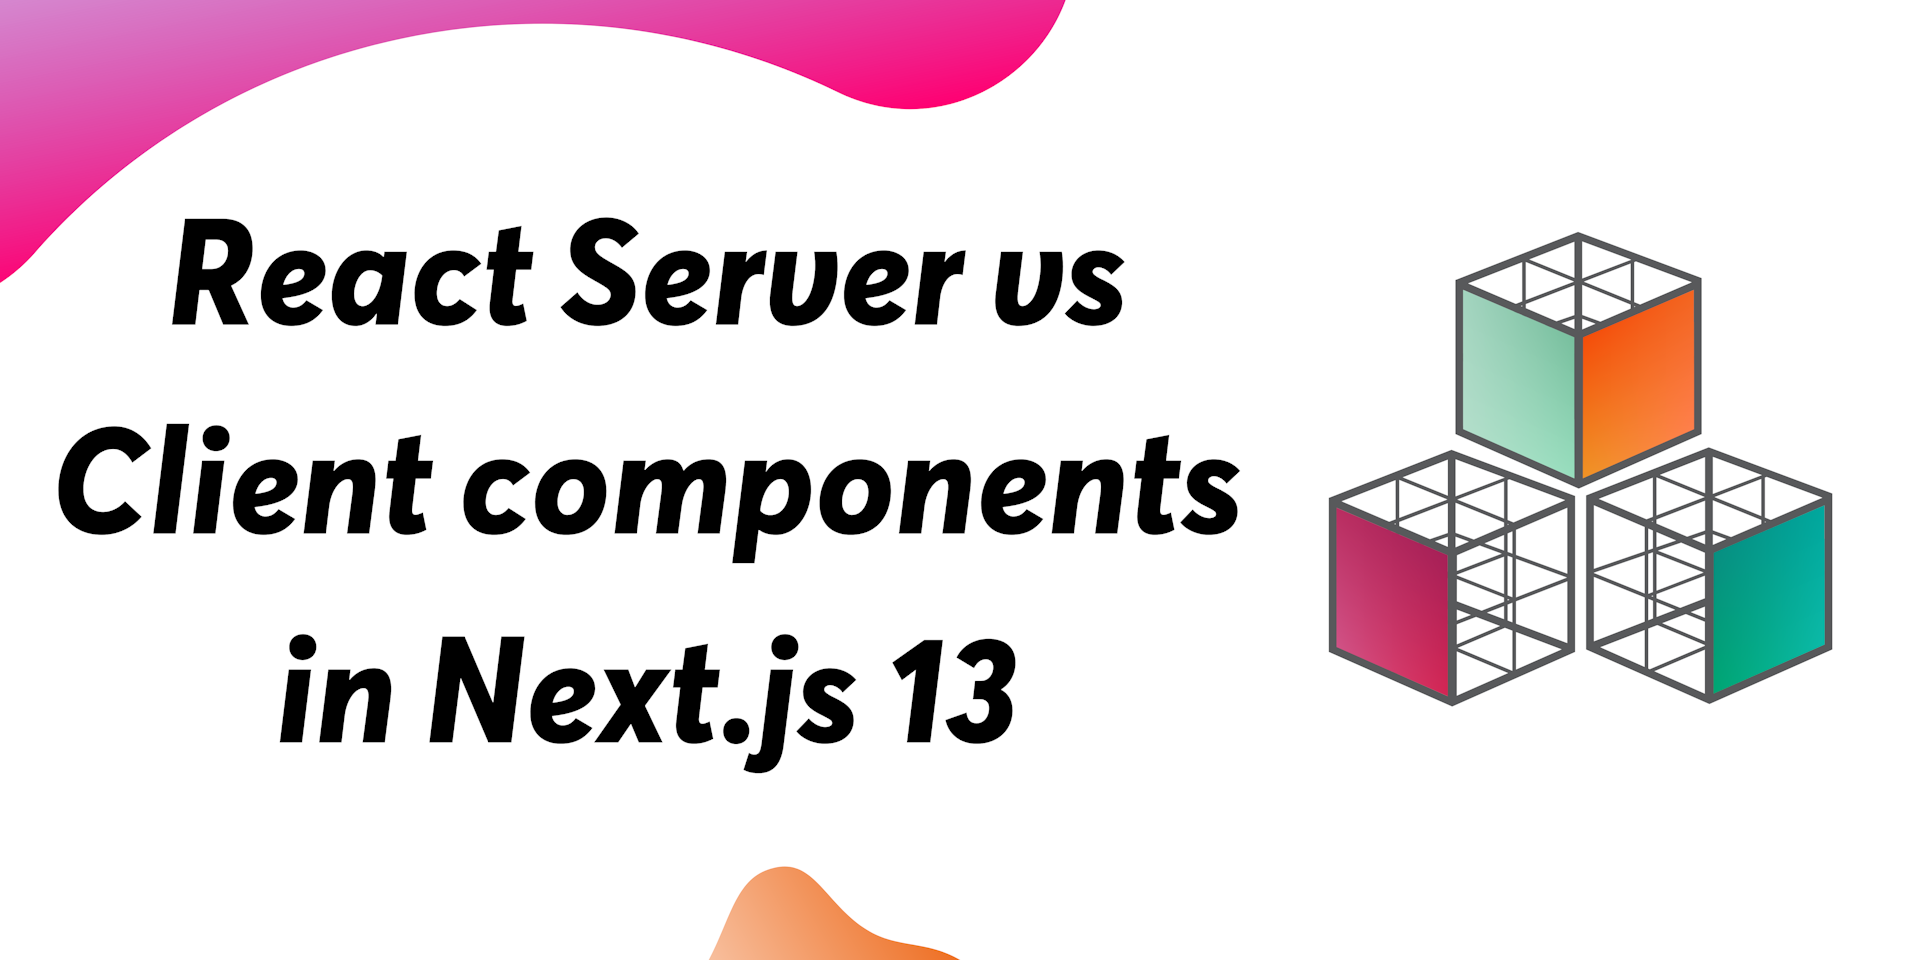 React Server vs Client components in Next.js 13